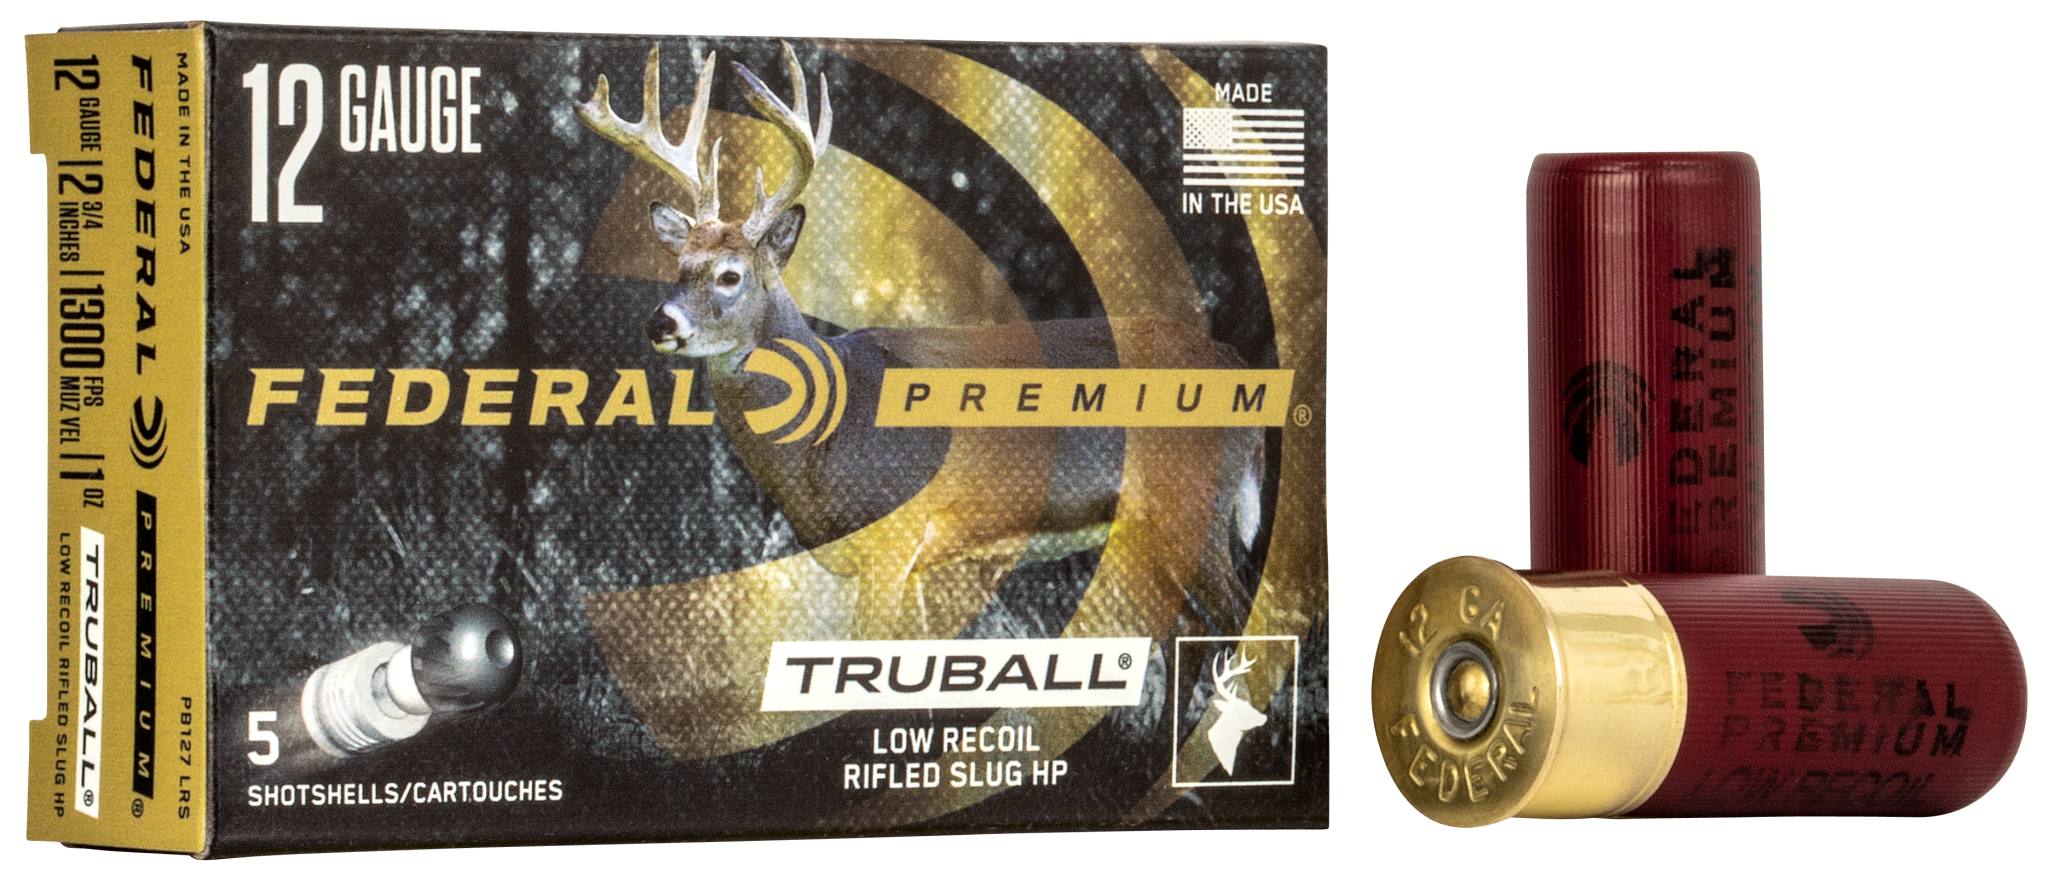 Buy TruBall Rifled Slug for USD 7.99